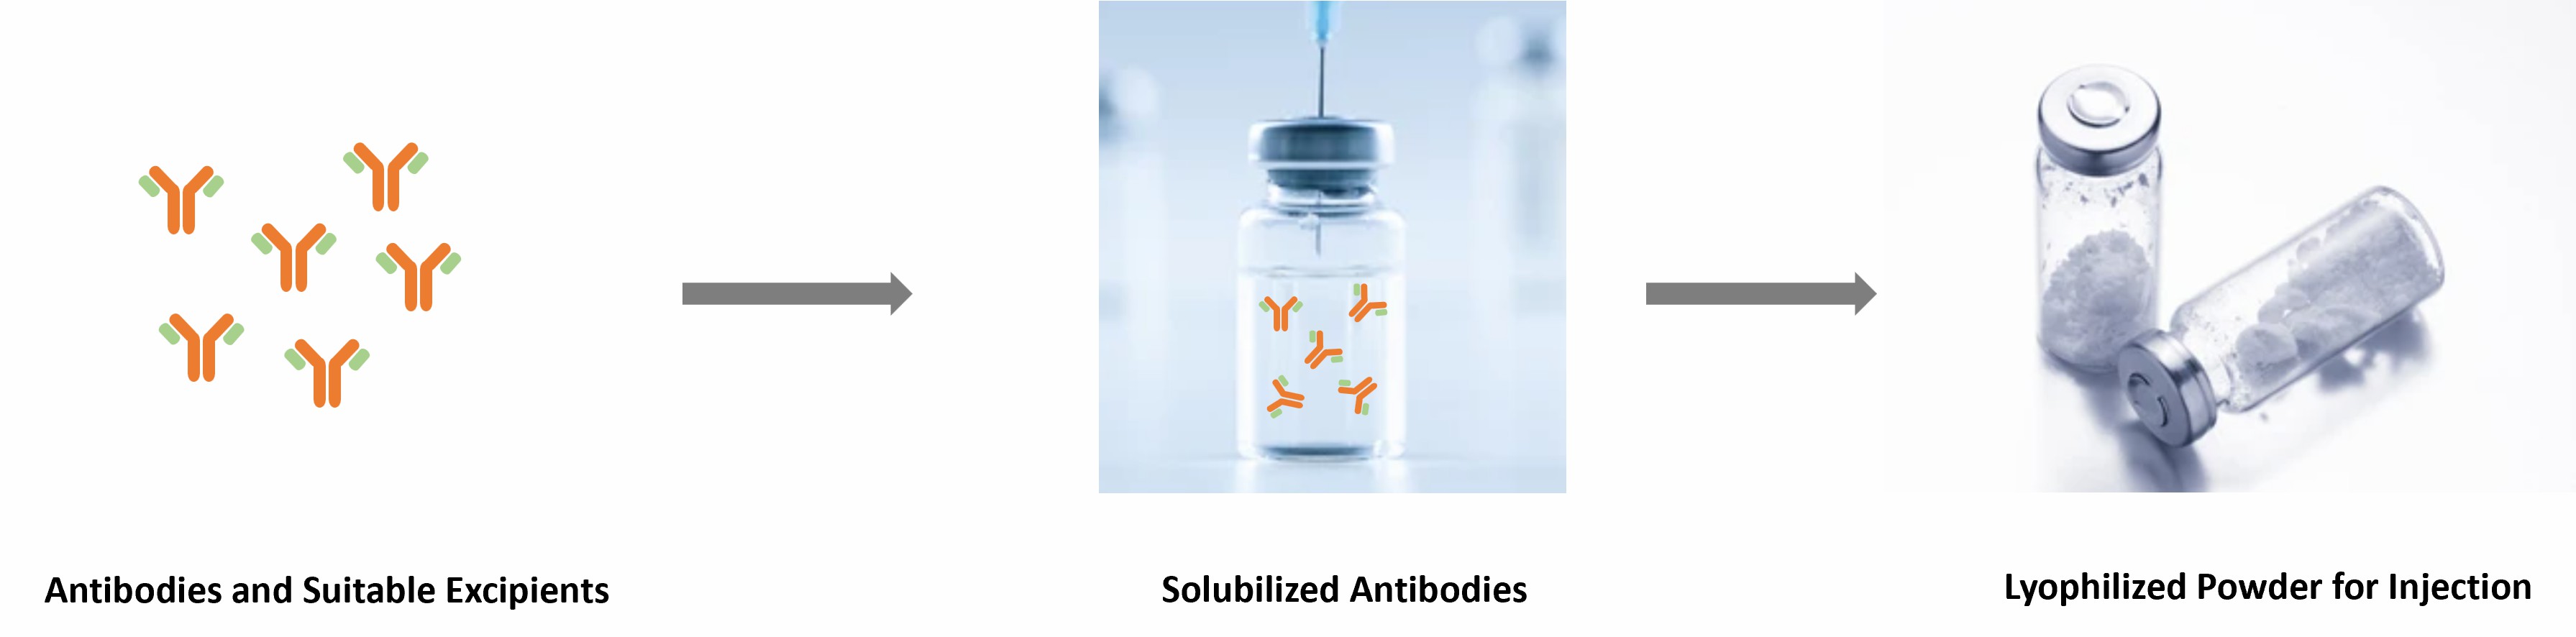 Antibody Lyophilized Powder Injection Development Process-CD Formulation